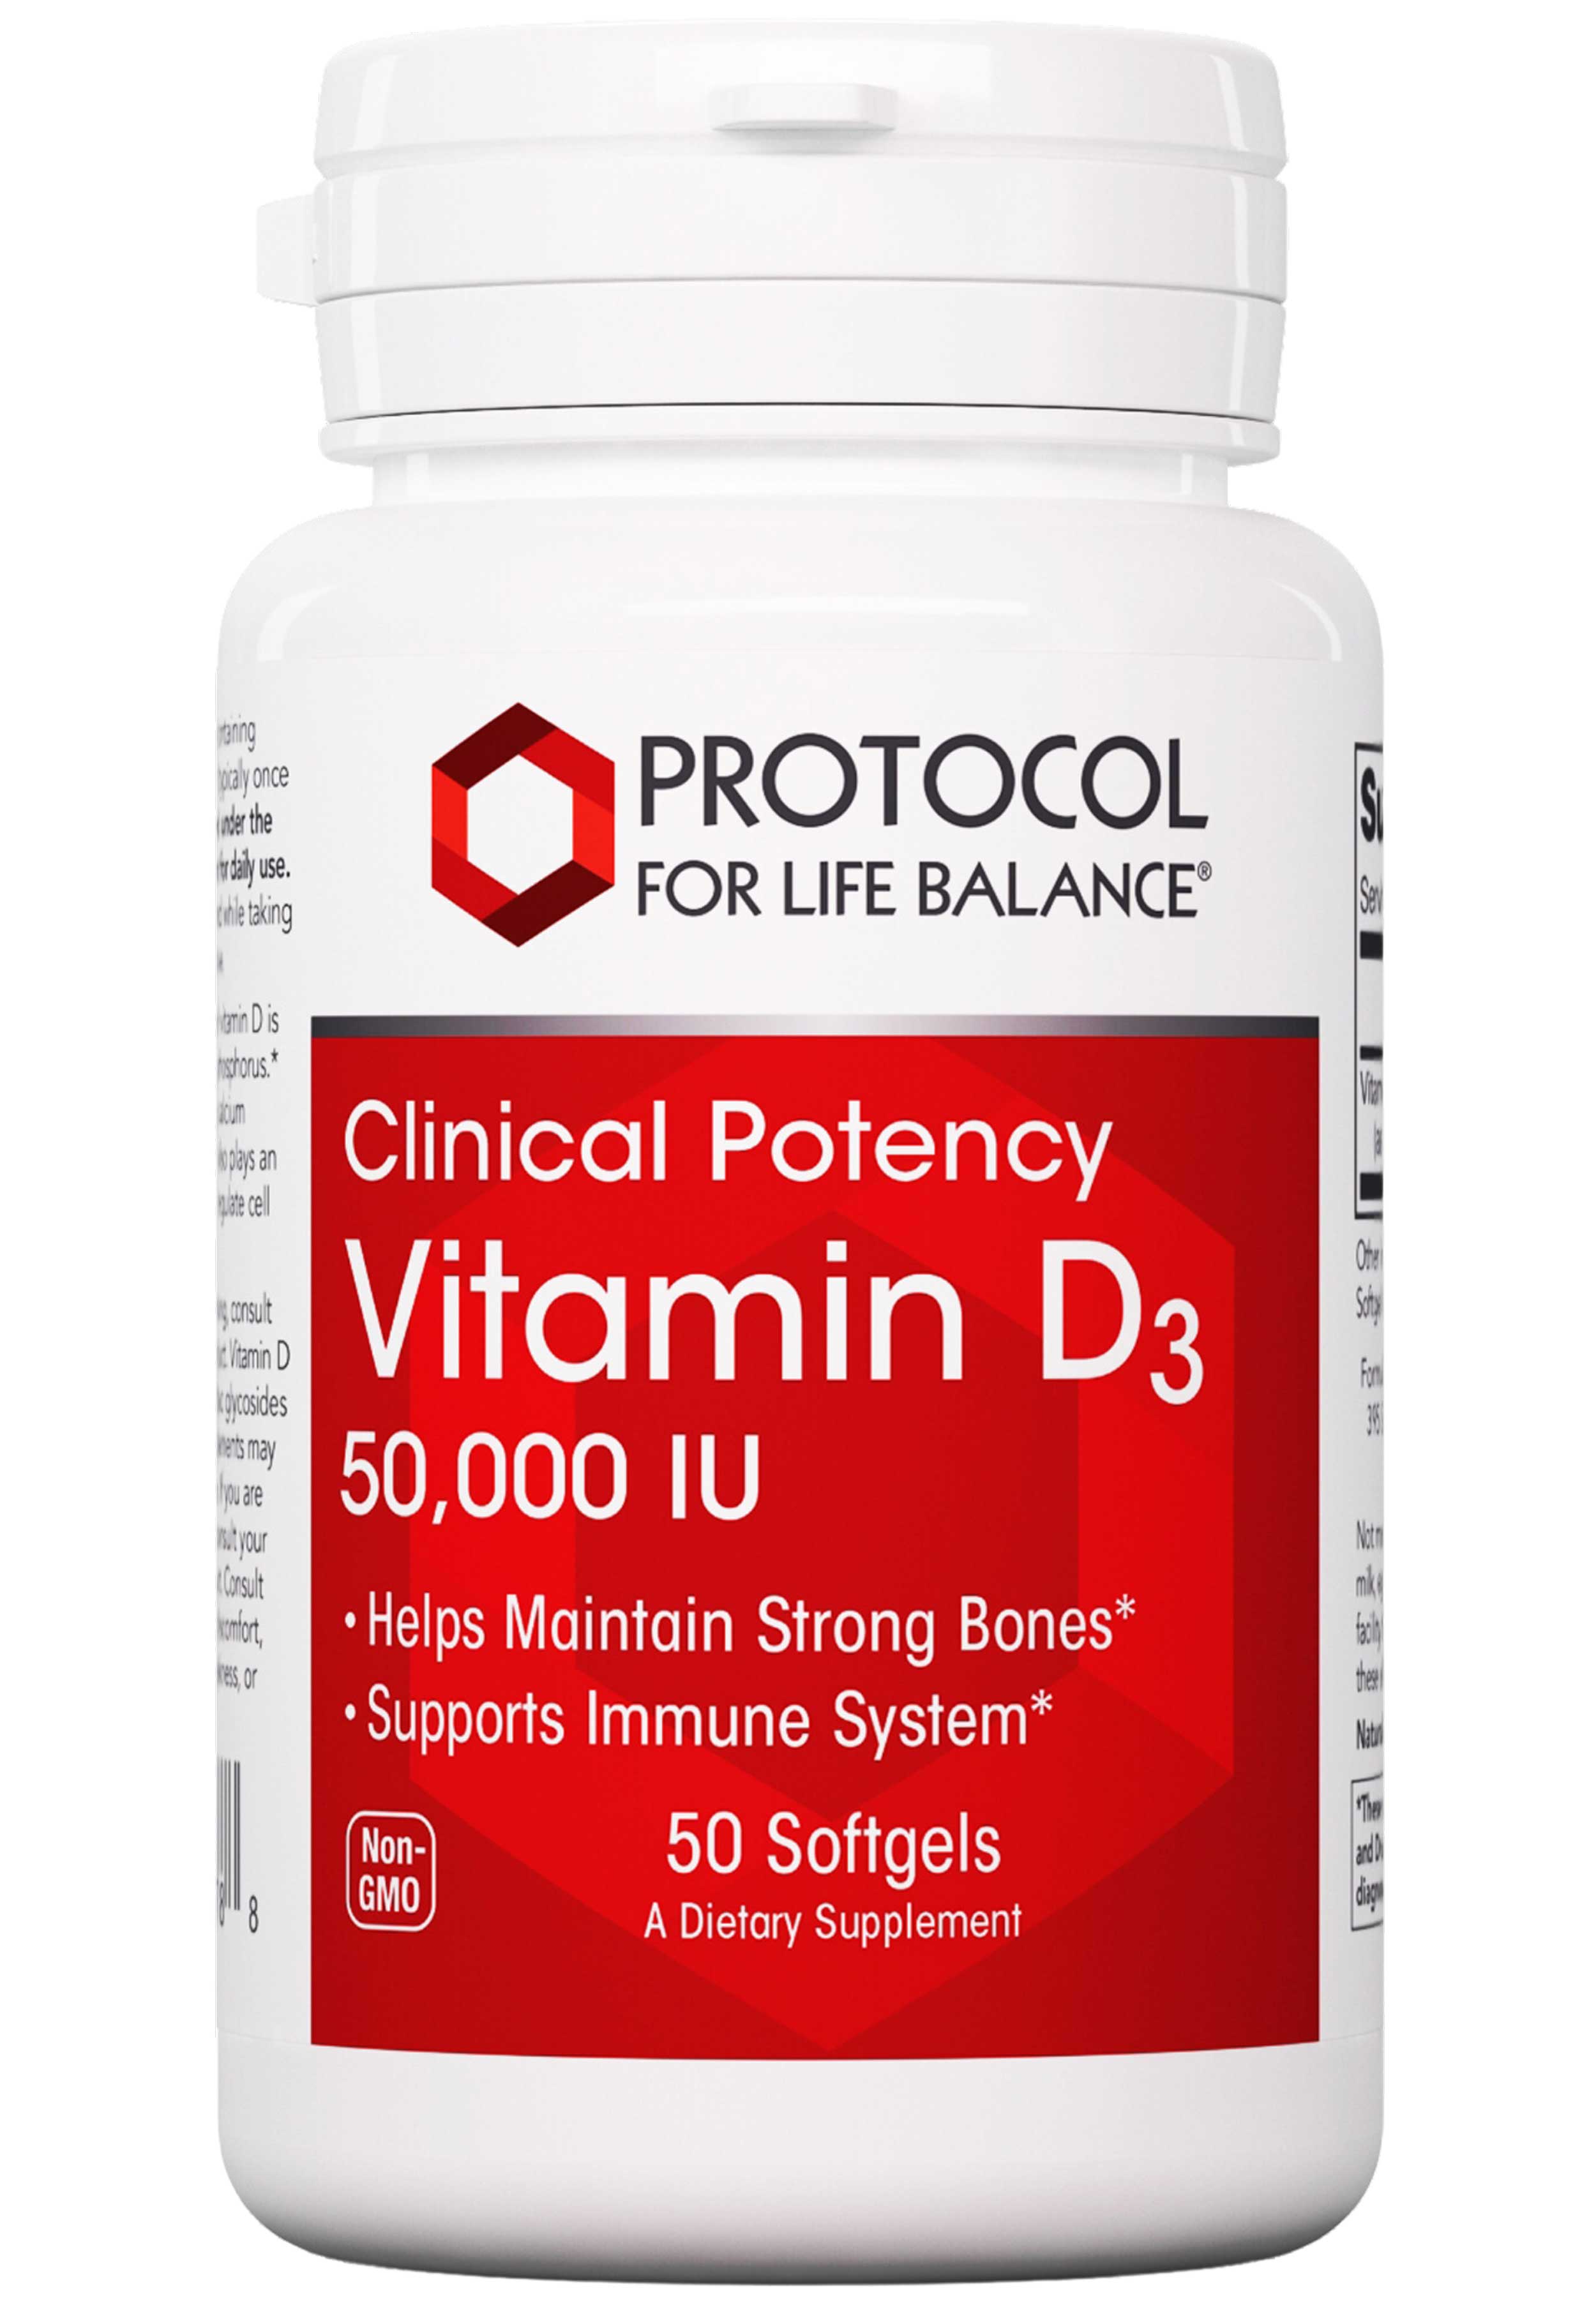 Protocol for Life Balance Clinical Potency Vitamin D3 50,000 IU